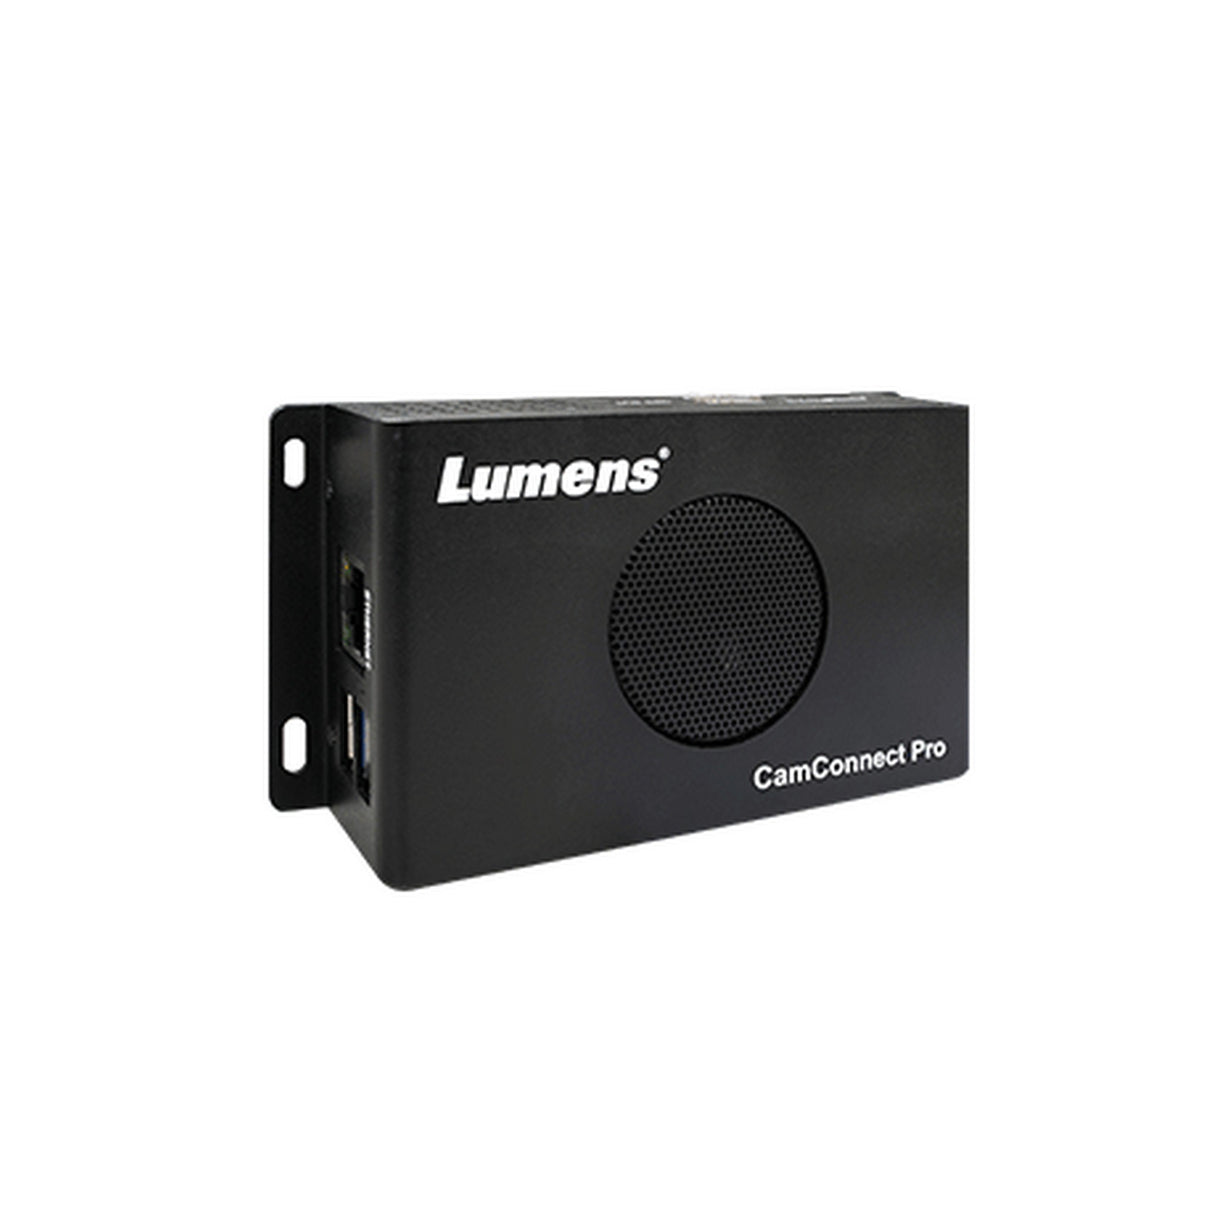 Lumens AI-BOX1 CamConnect Processer for 4 IP Cameras